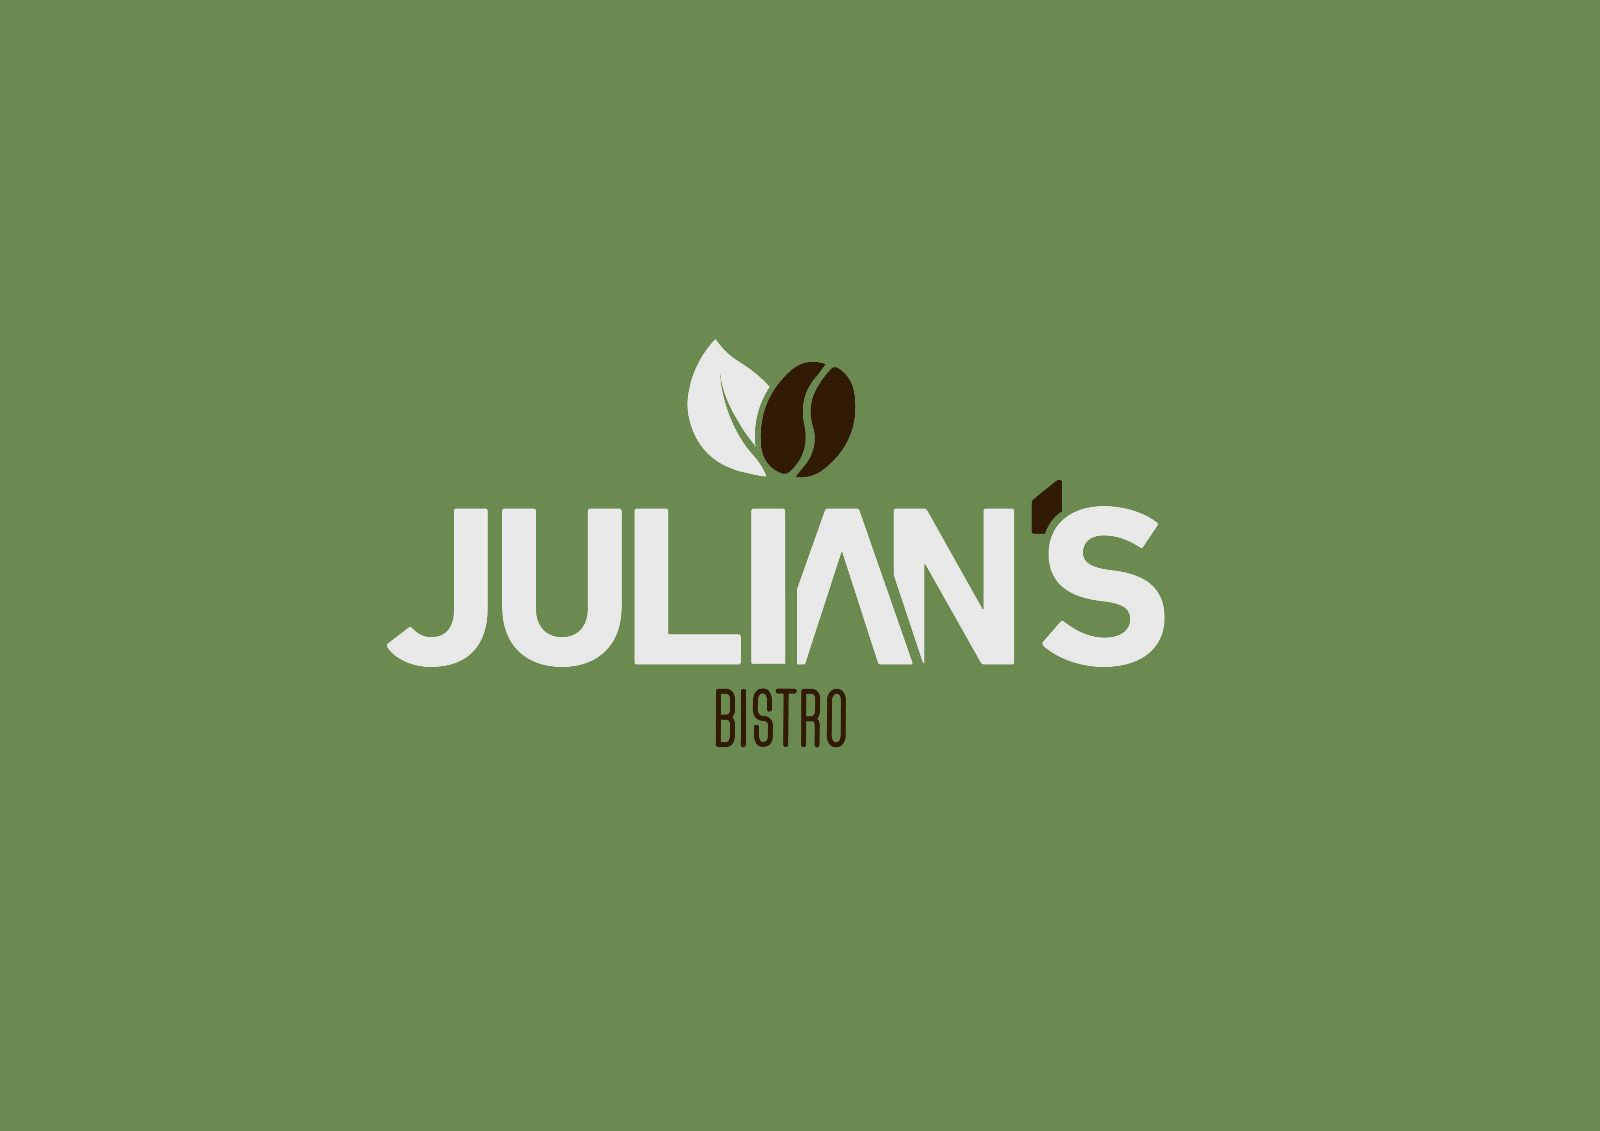 Julians Bistro